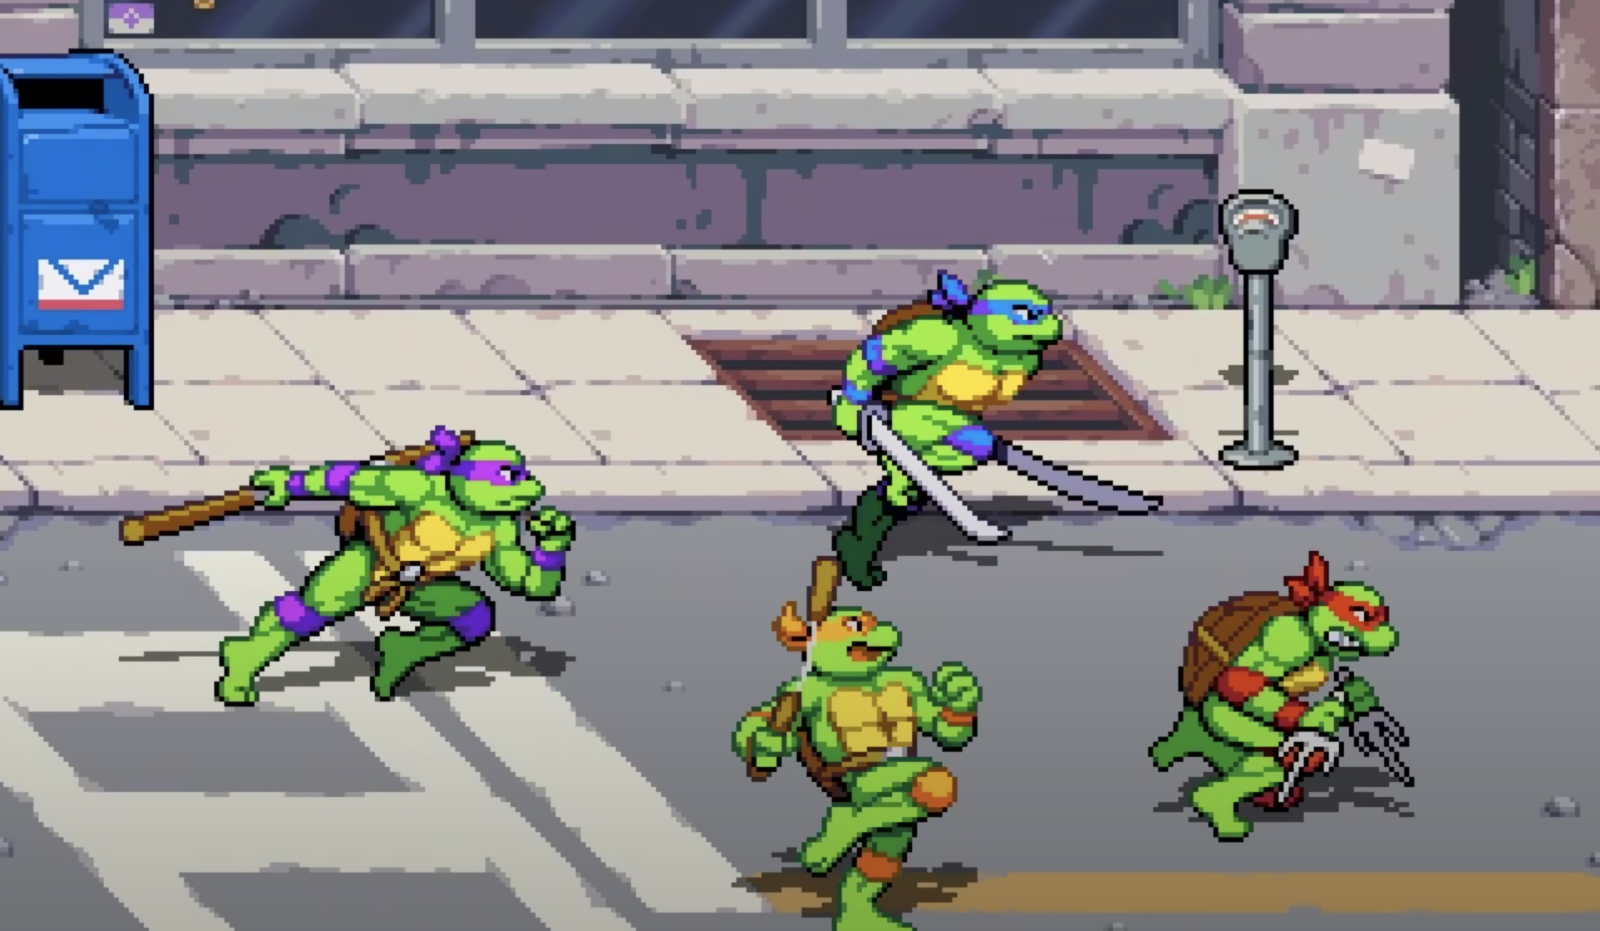 ninja turtle game